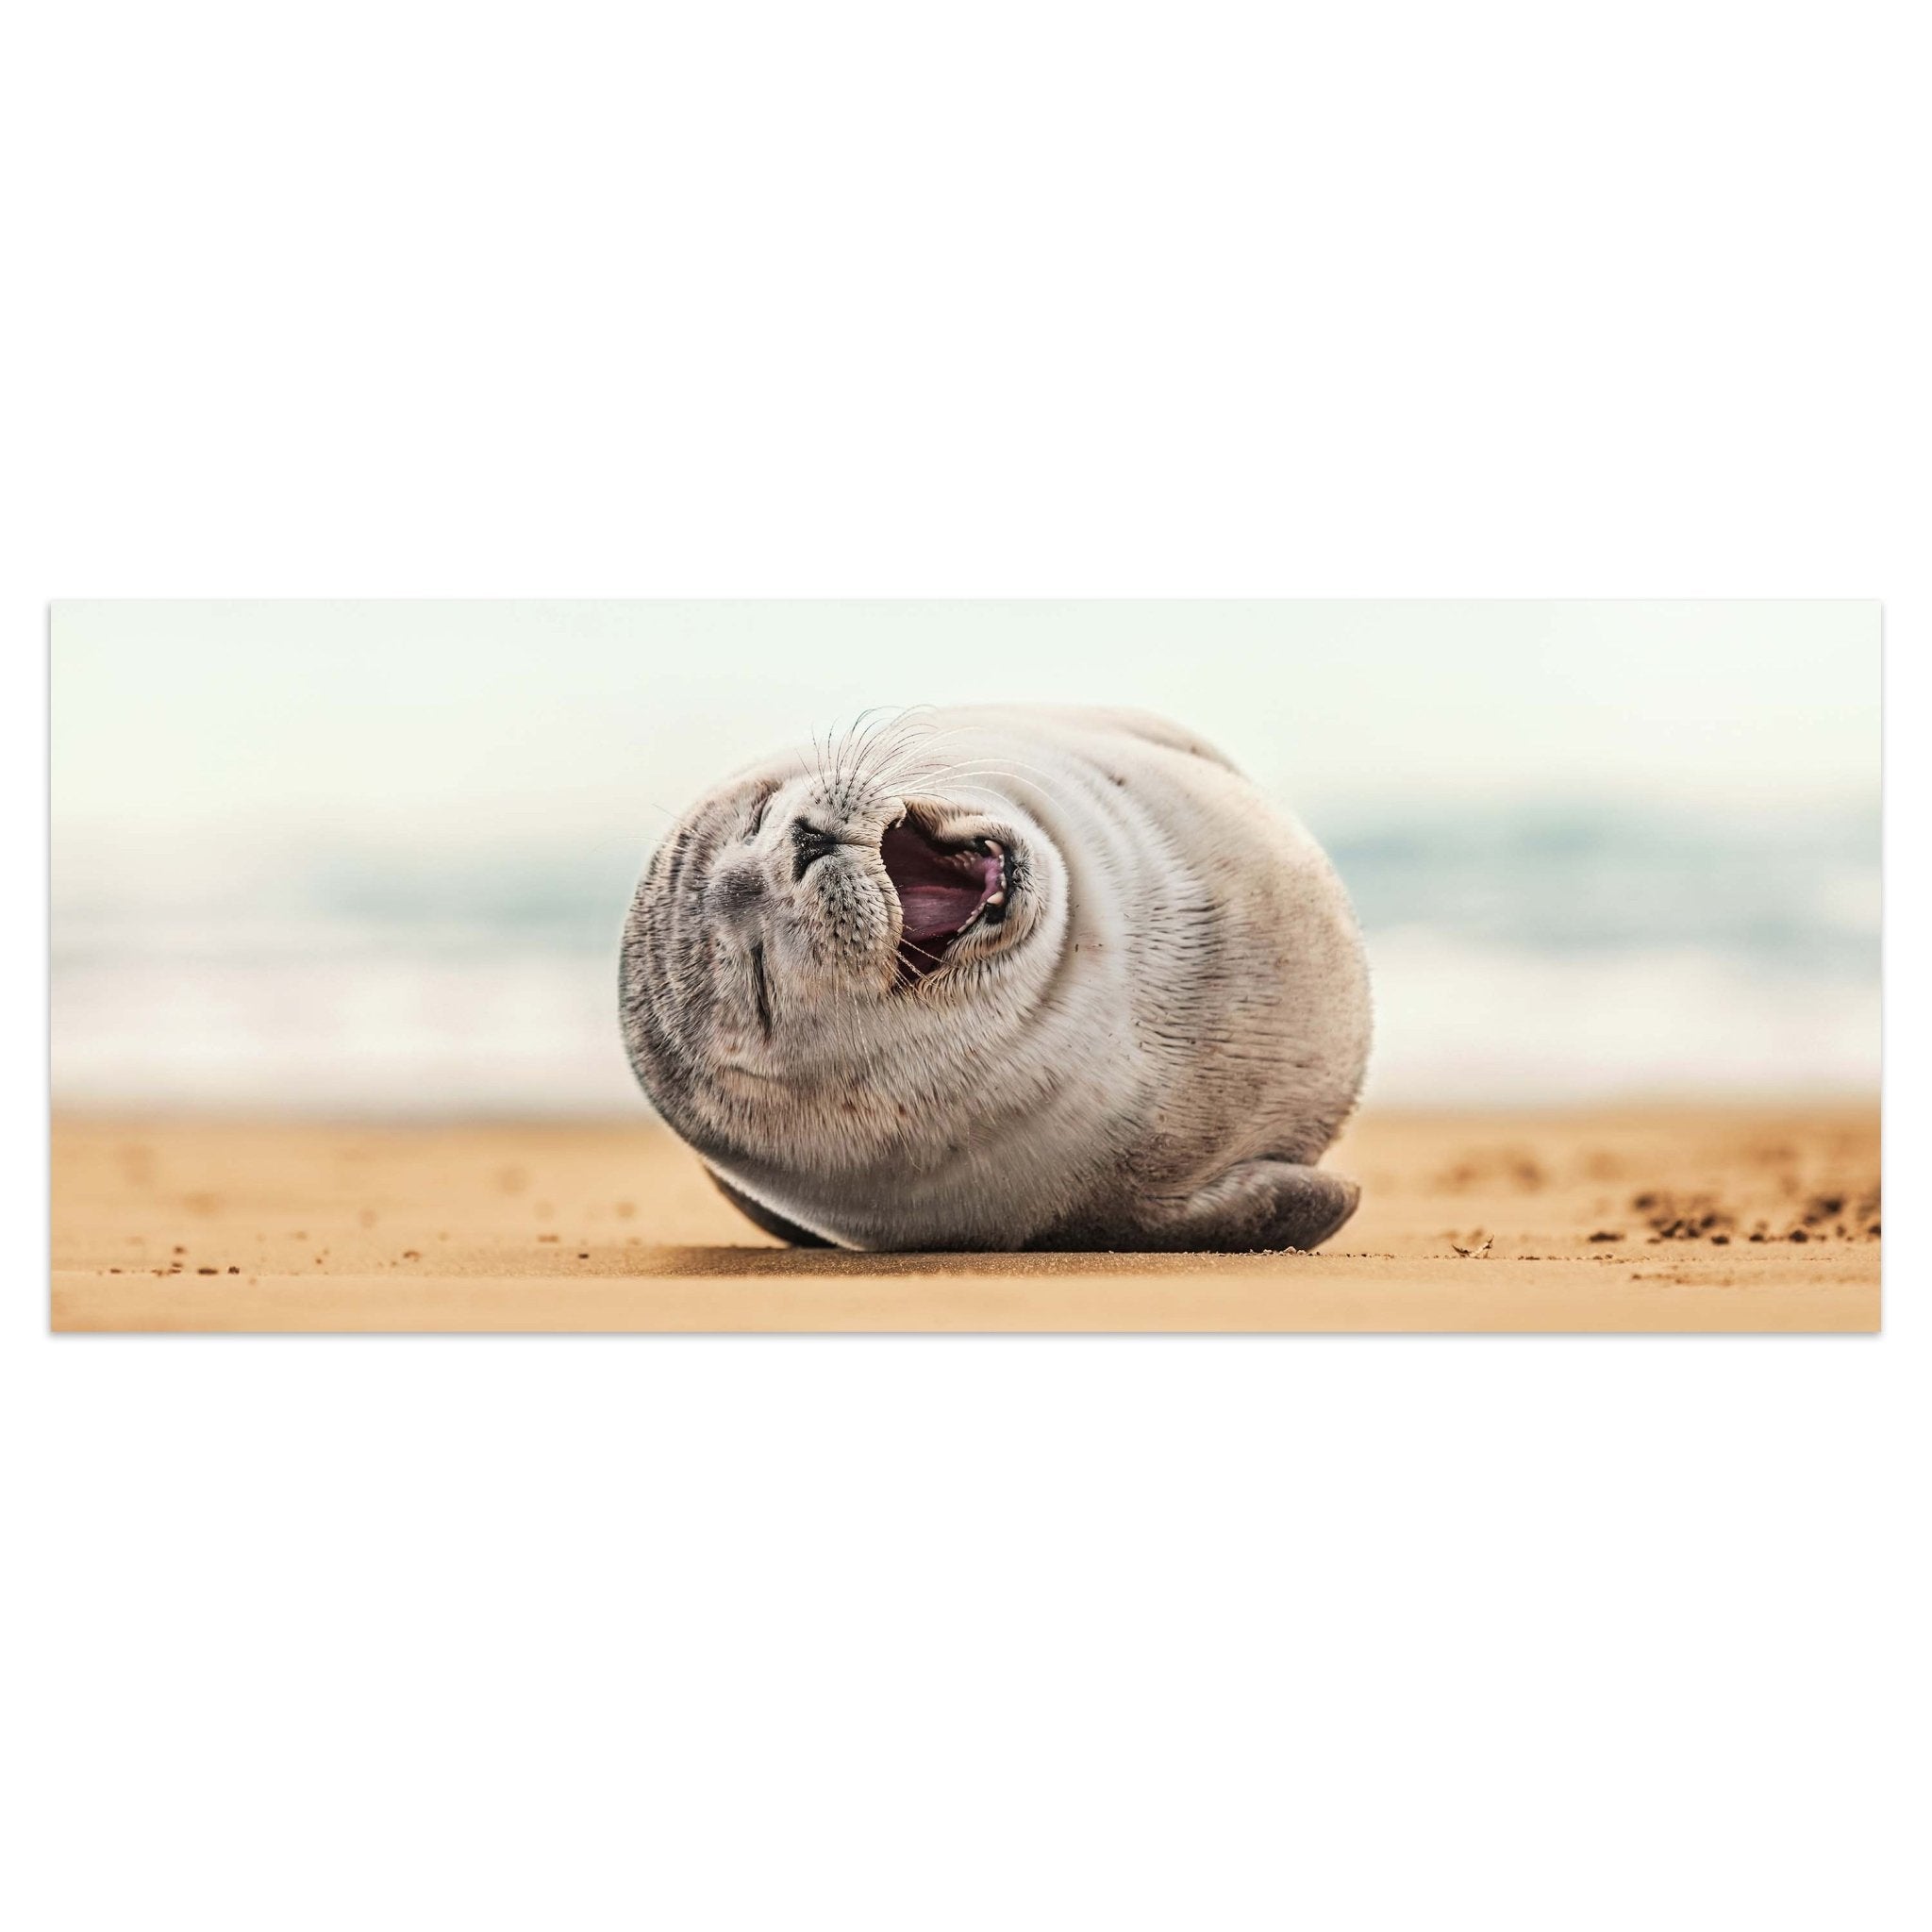 Leinwandbild Robbe, Seehund, Strand, Tier M1119 kaufen - Bild 1